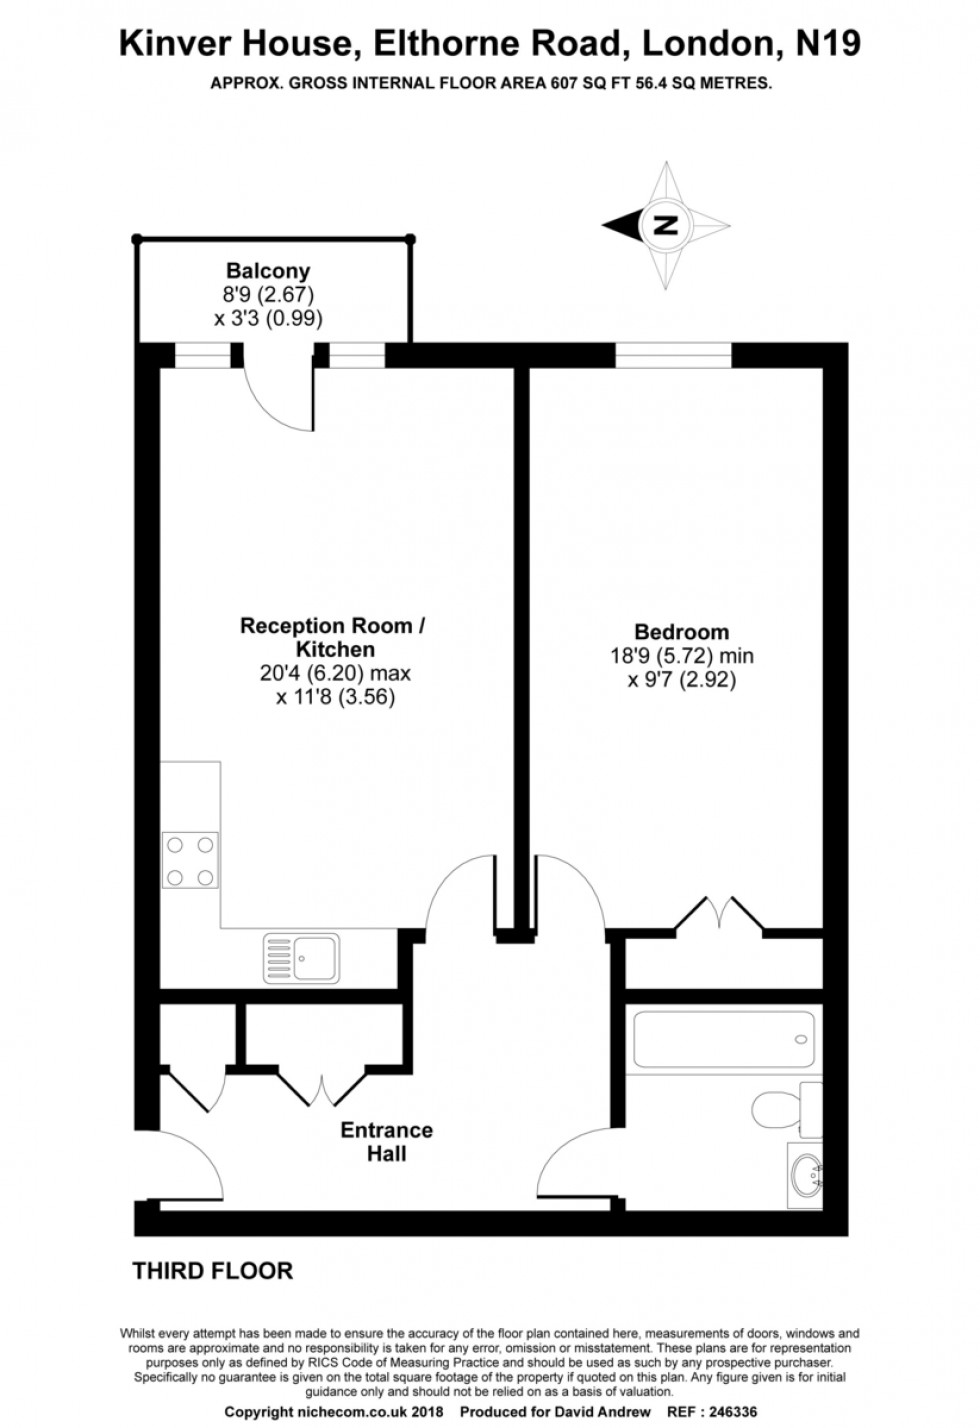 Floorplan for Kinver House, Elthorne Road, N19 4AS